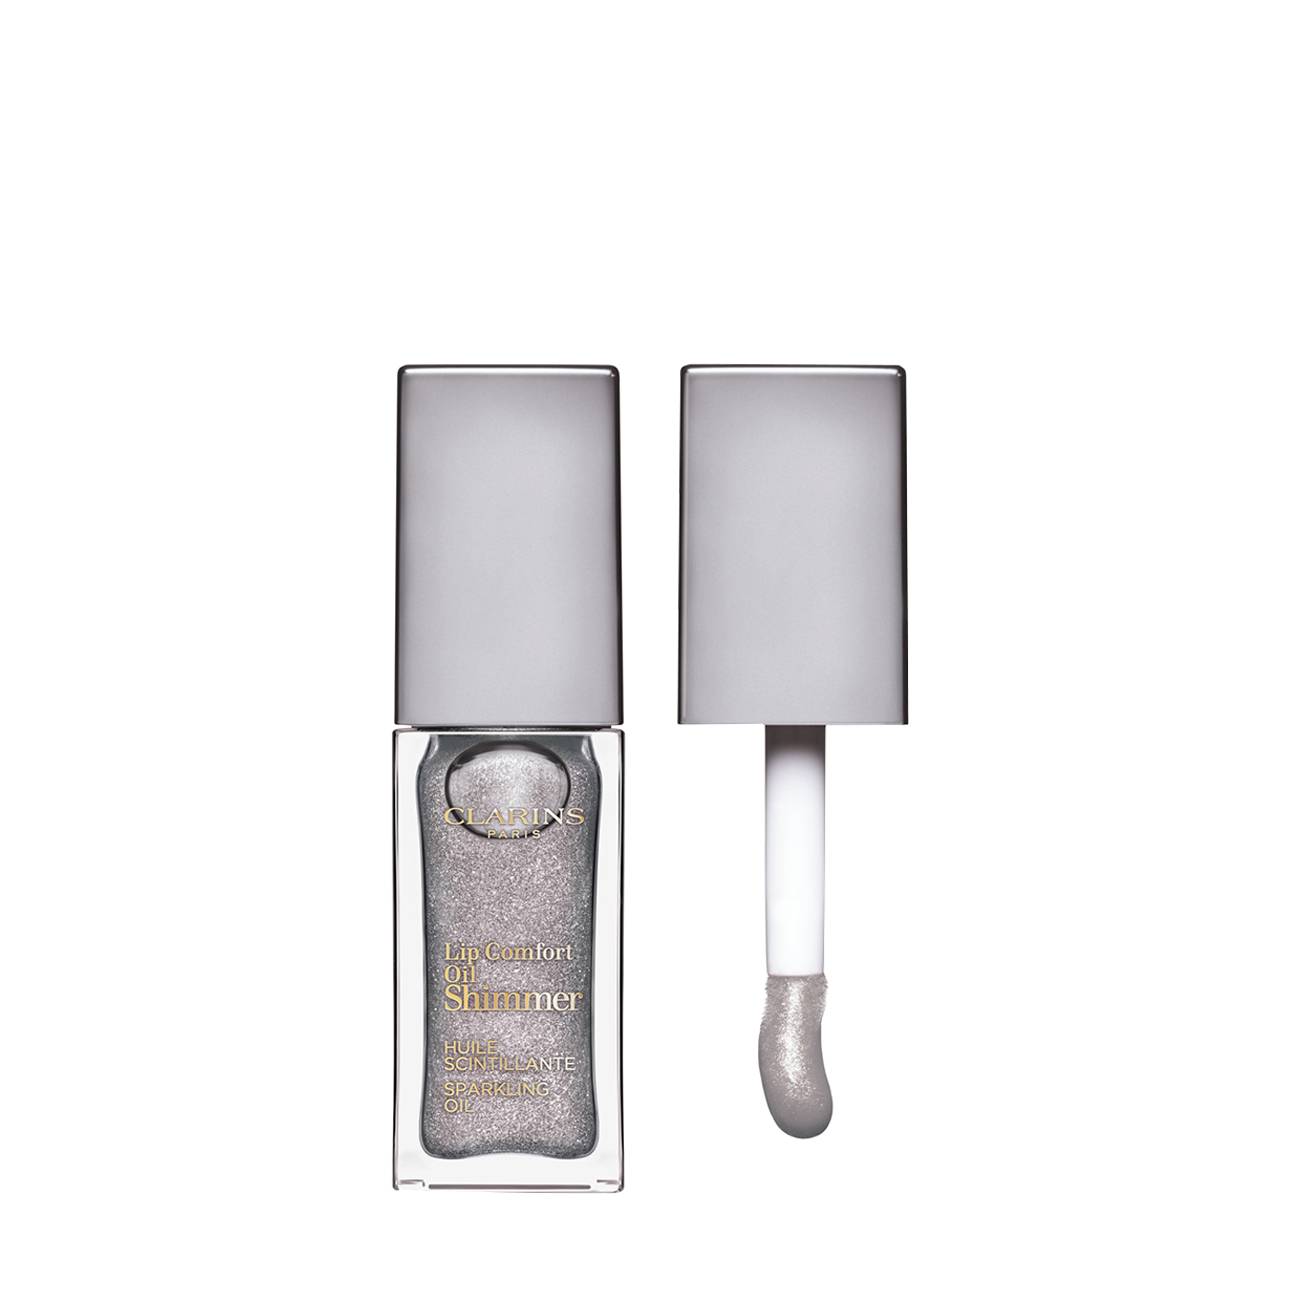 Lip Comfort Oil Shimmer 01 7 ml Clarins bestvalue.eu